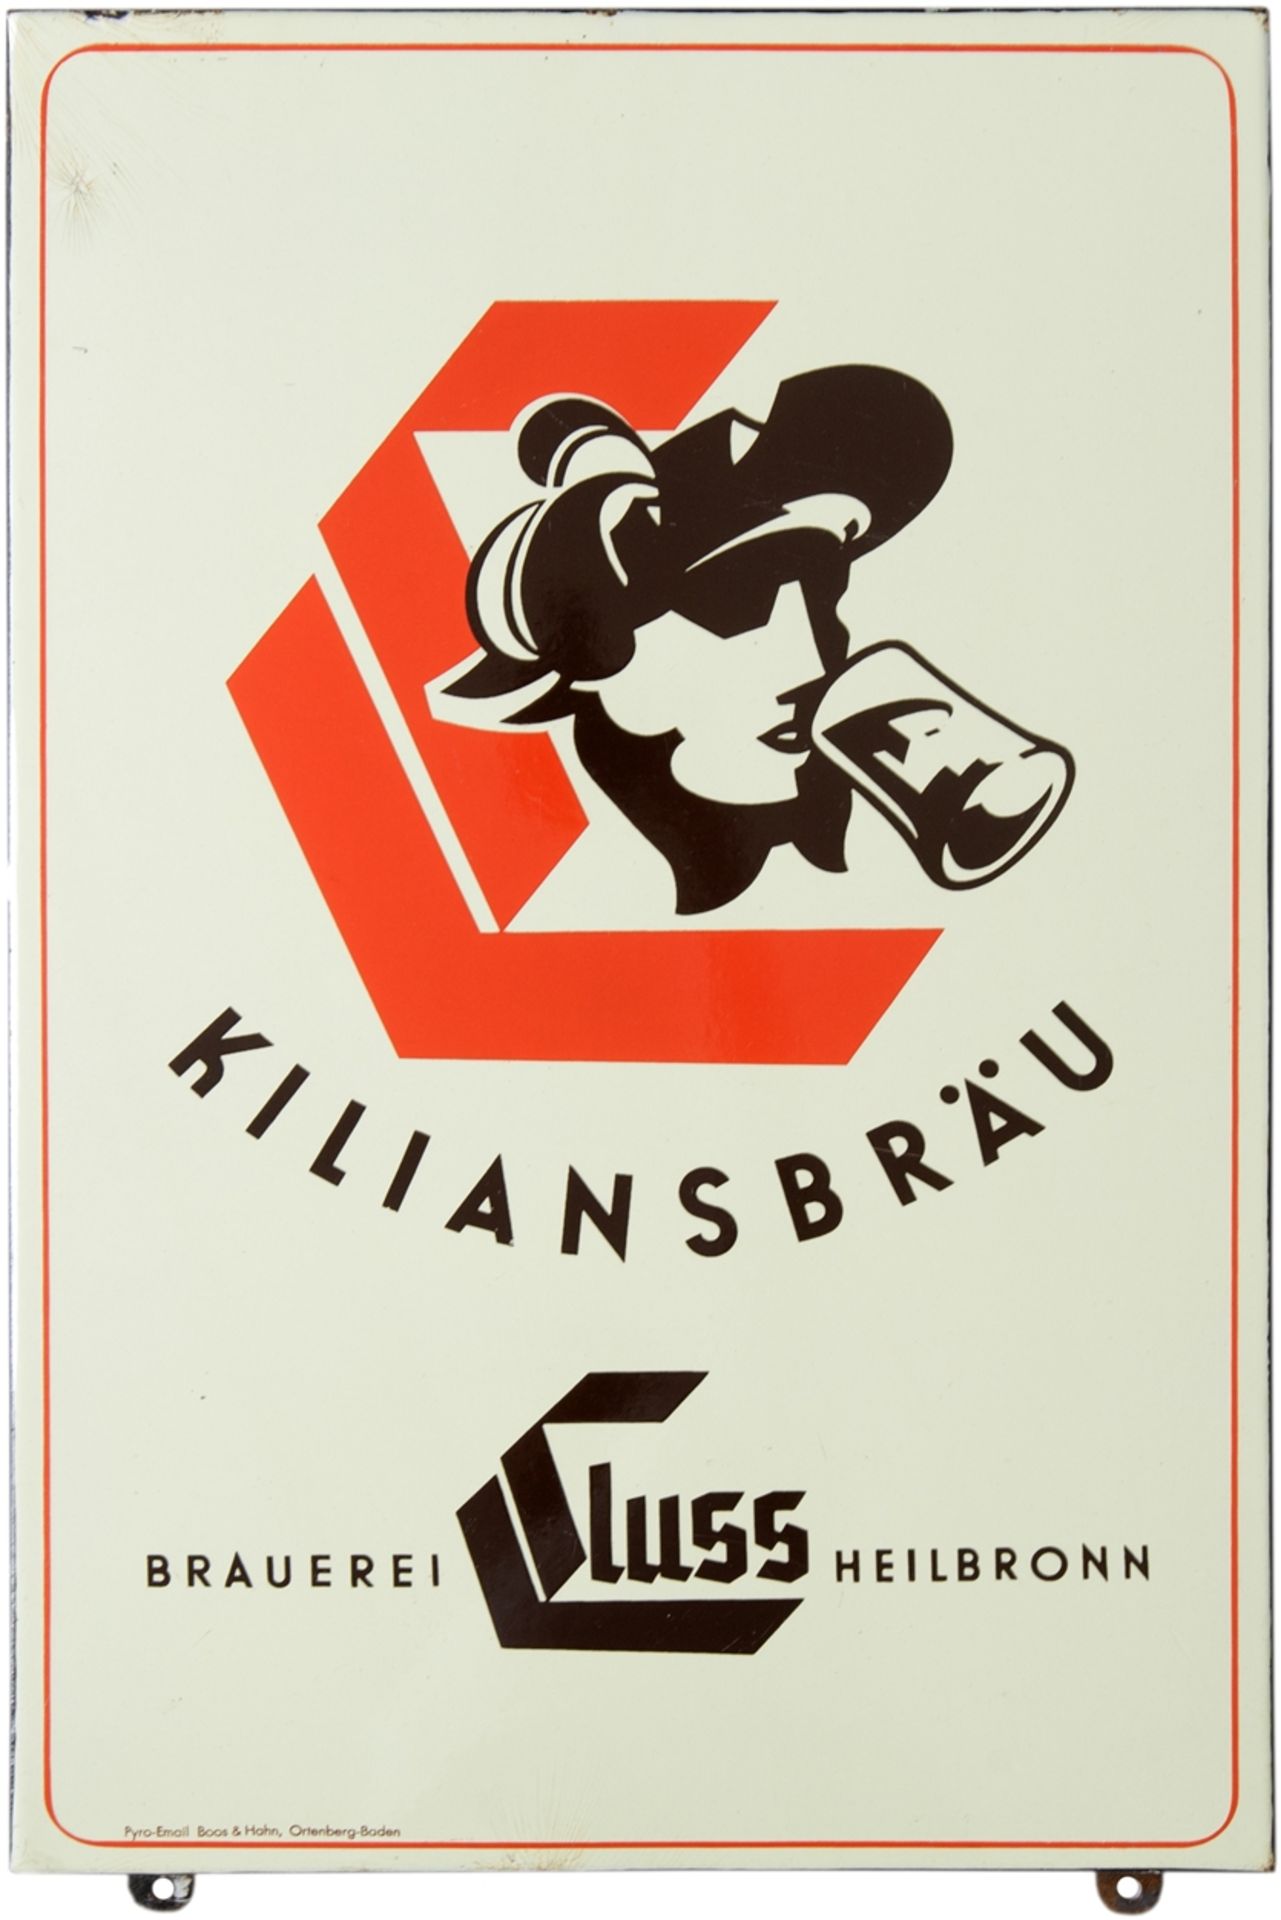 Emailschild Kiliansbräu, Brauerei Cluss Heilbronn, um 1950